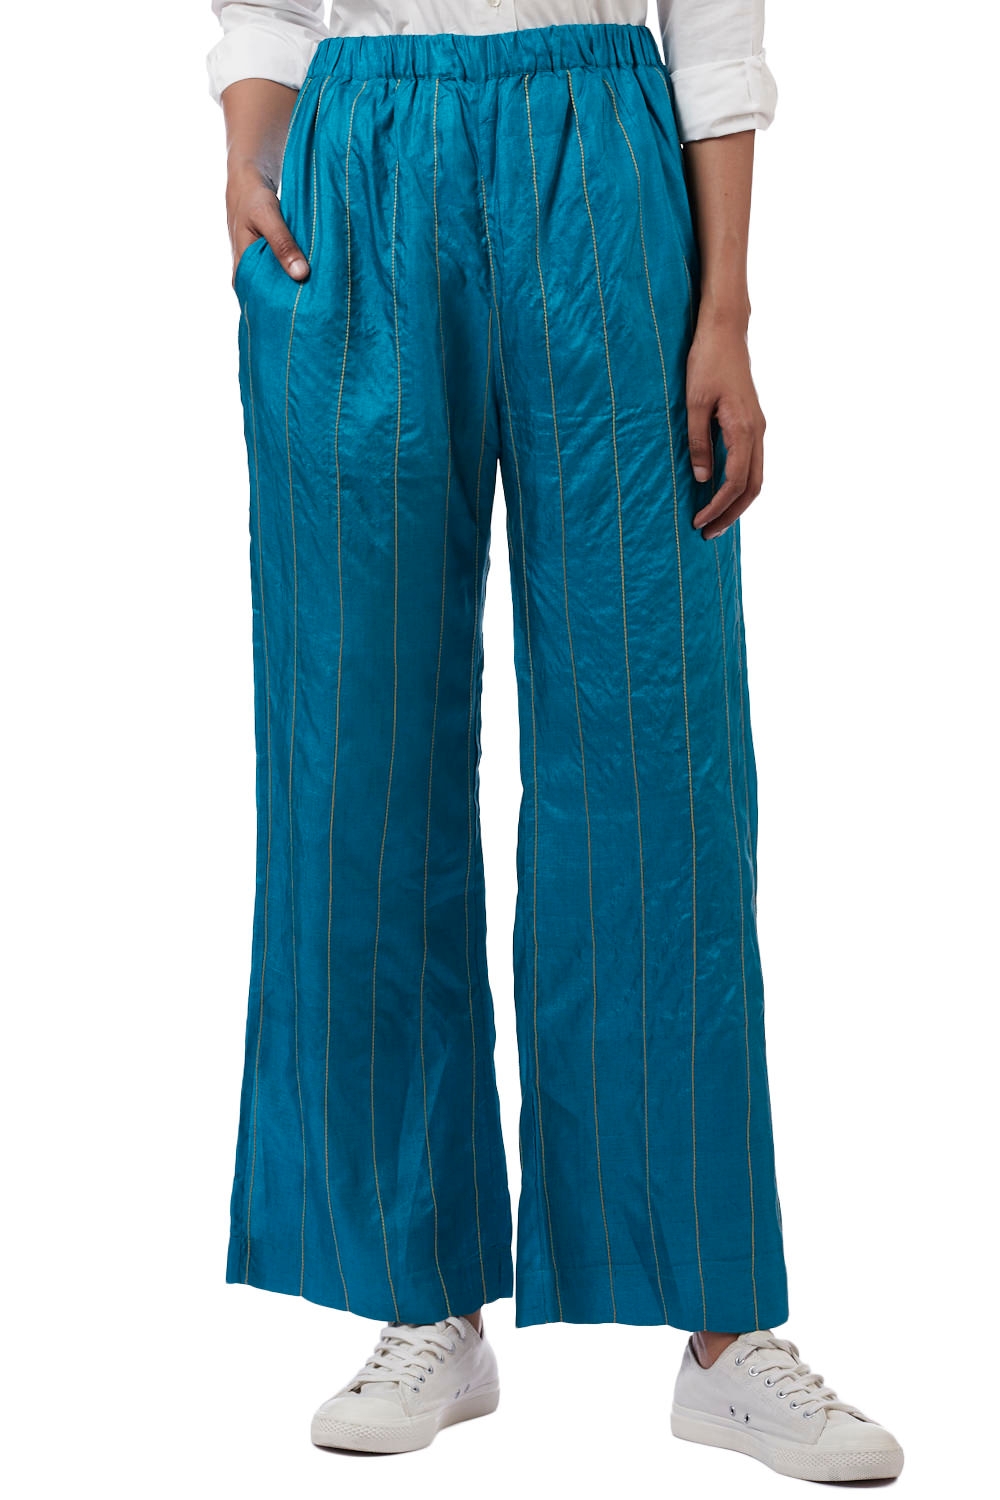 ABRAHAM AND THAKORE | Handwoven Tussar Silk Straight Pants